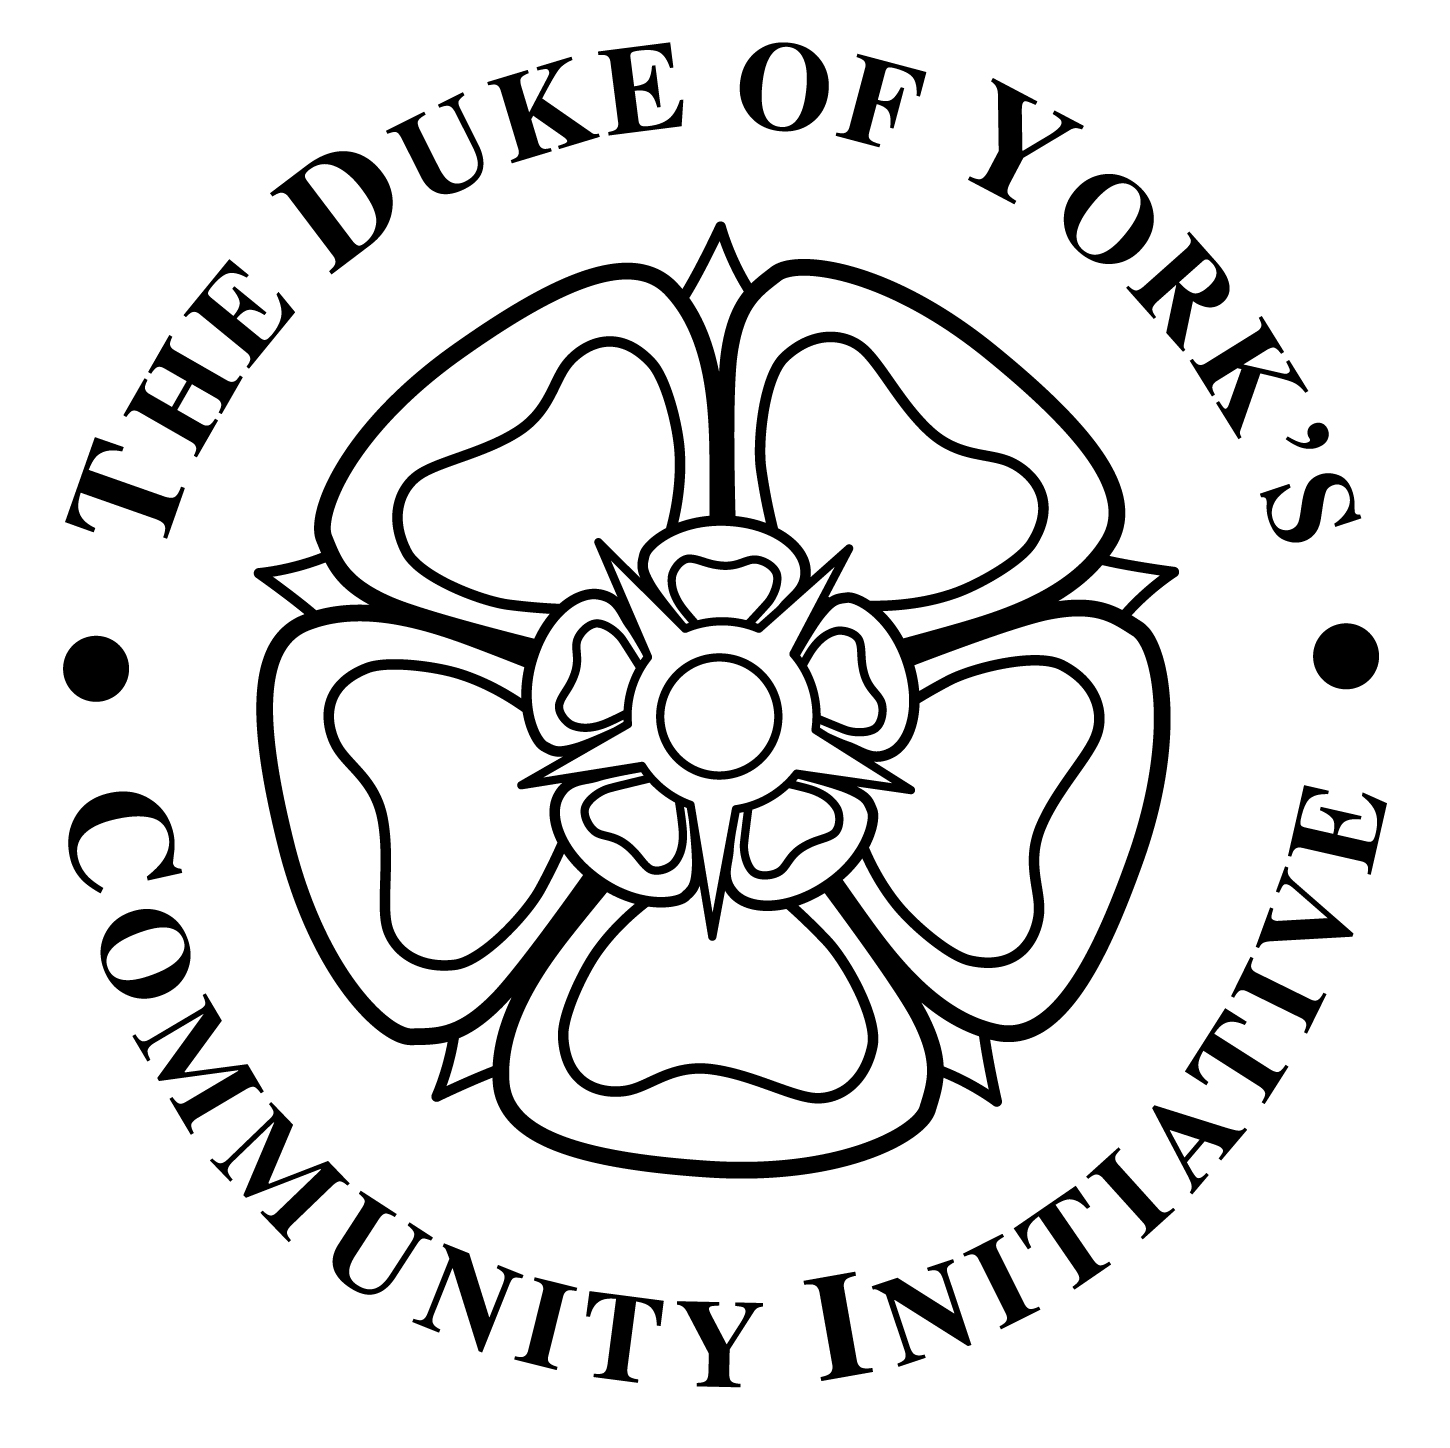 Duke of York community initiative.jpg